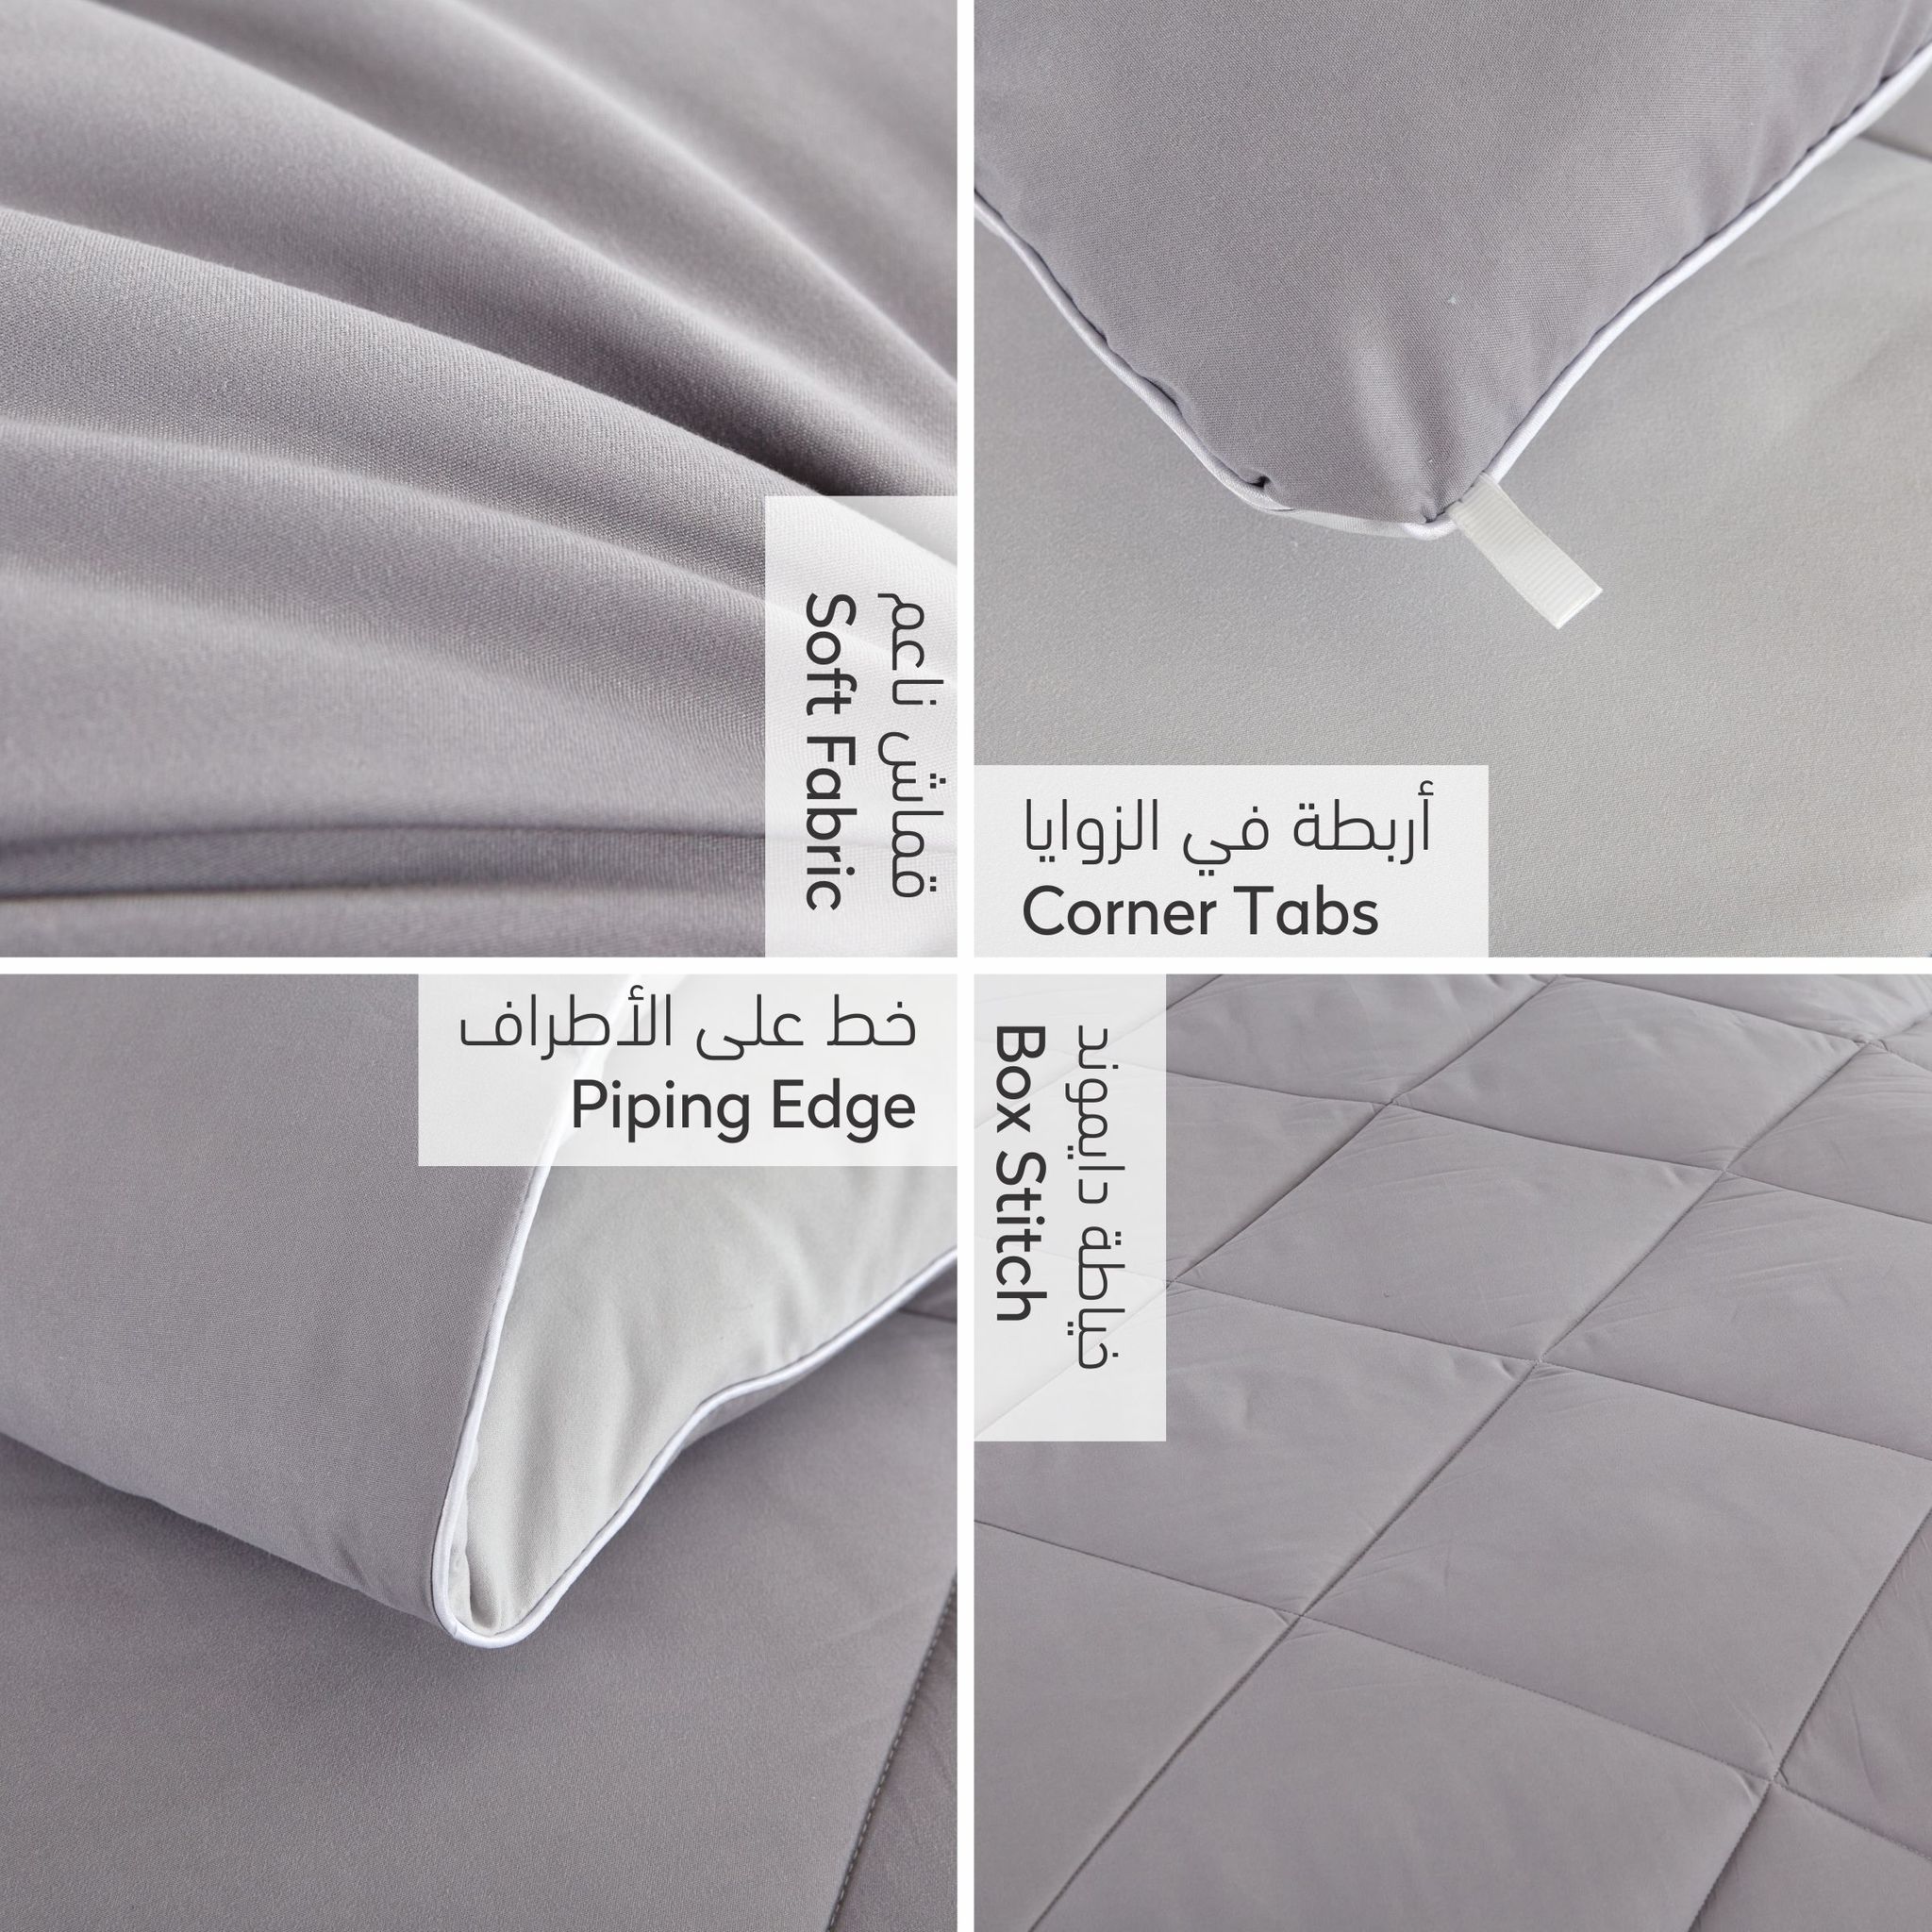 Diamond Quilted Reversible Comforter Set 4-Piece Twin Grey/Light Grey